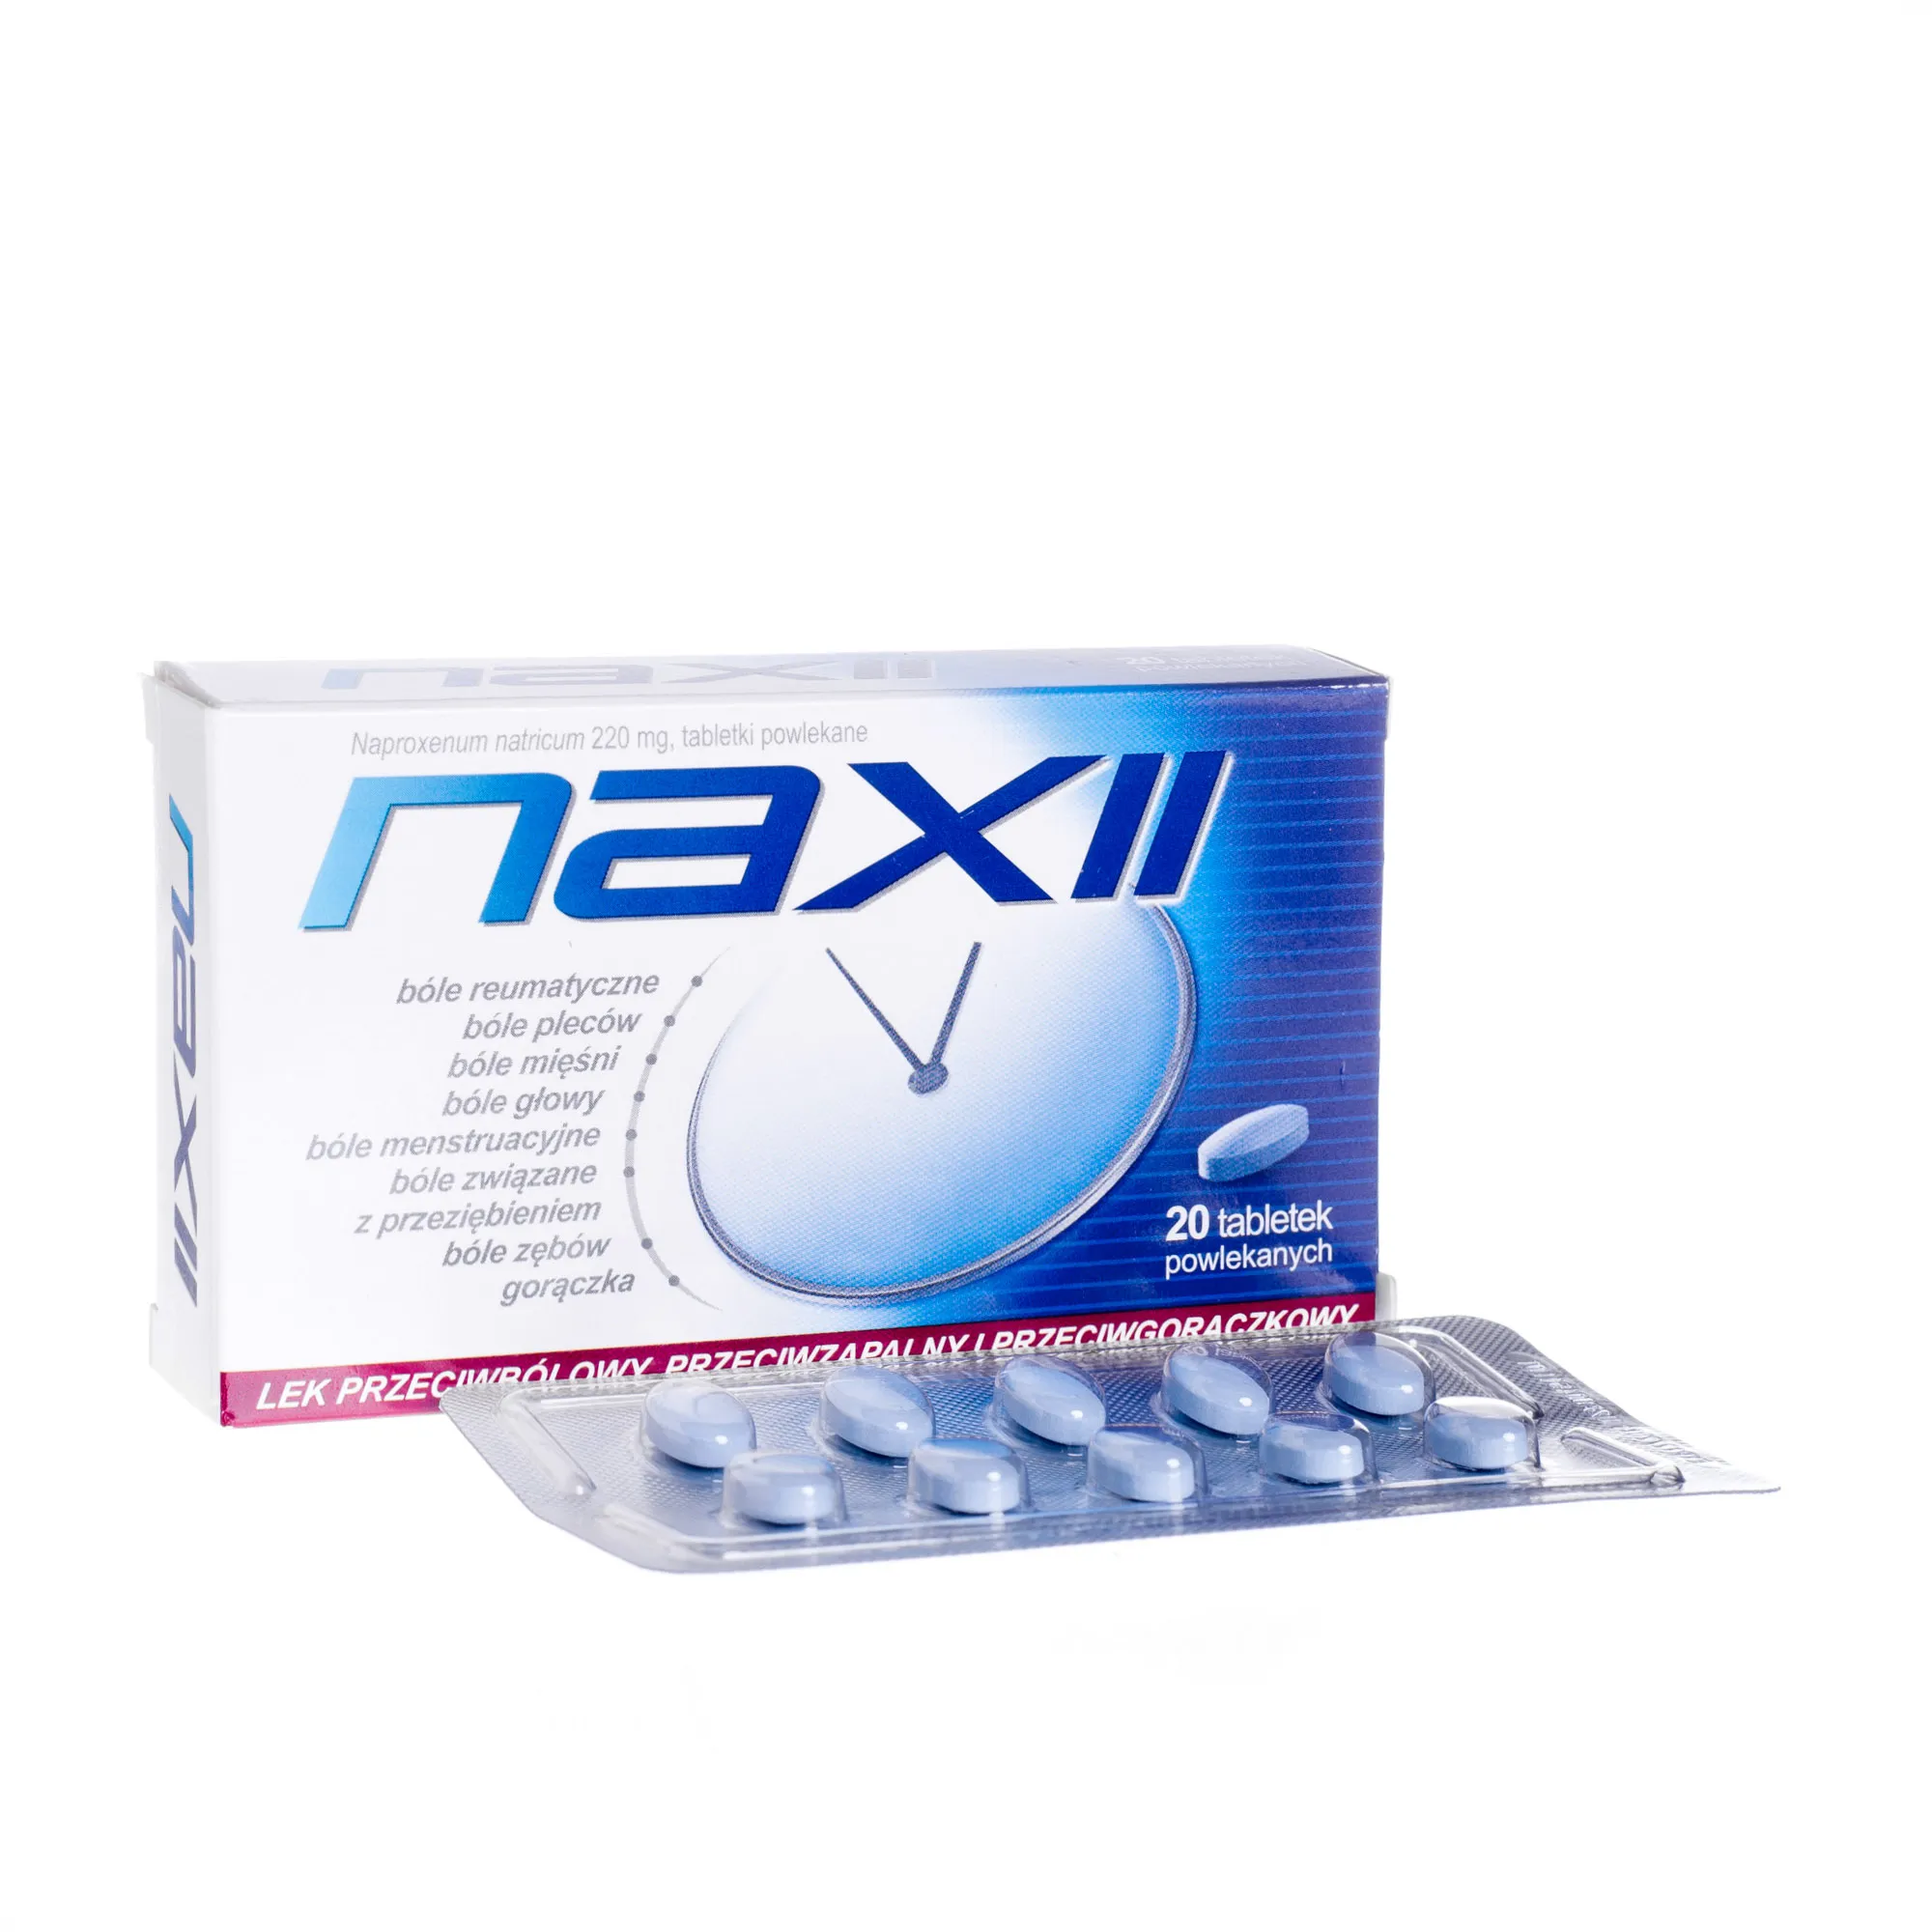 Naxii, 20 tabletek powlekanych